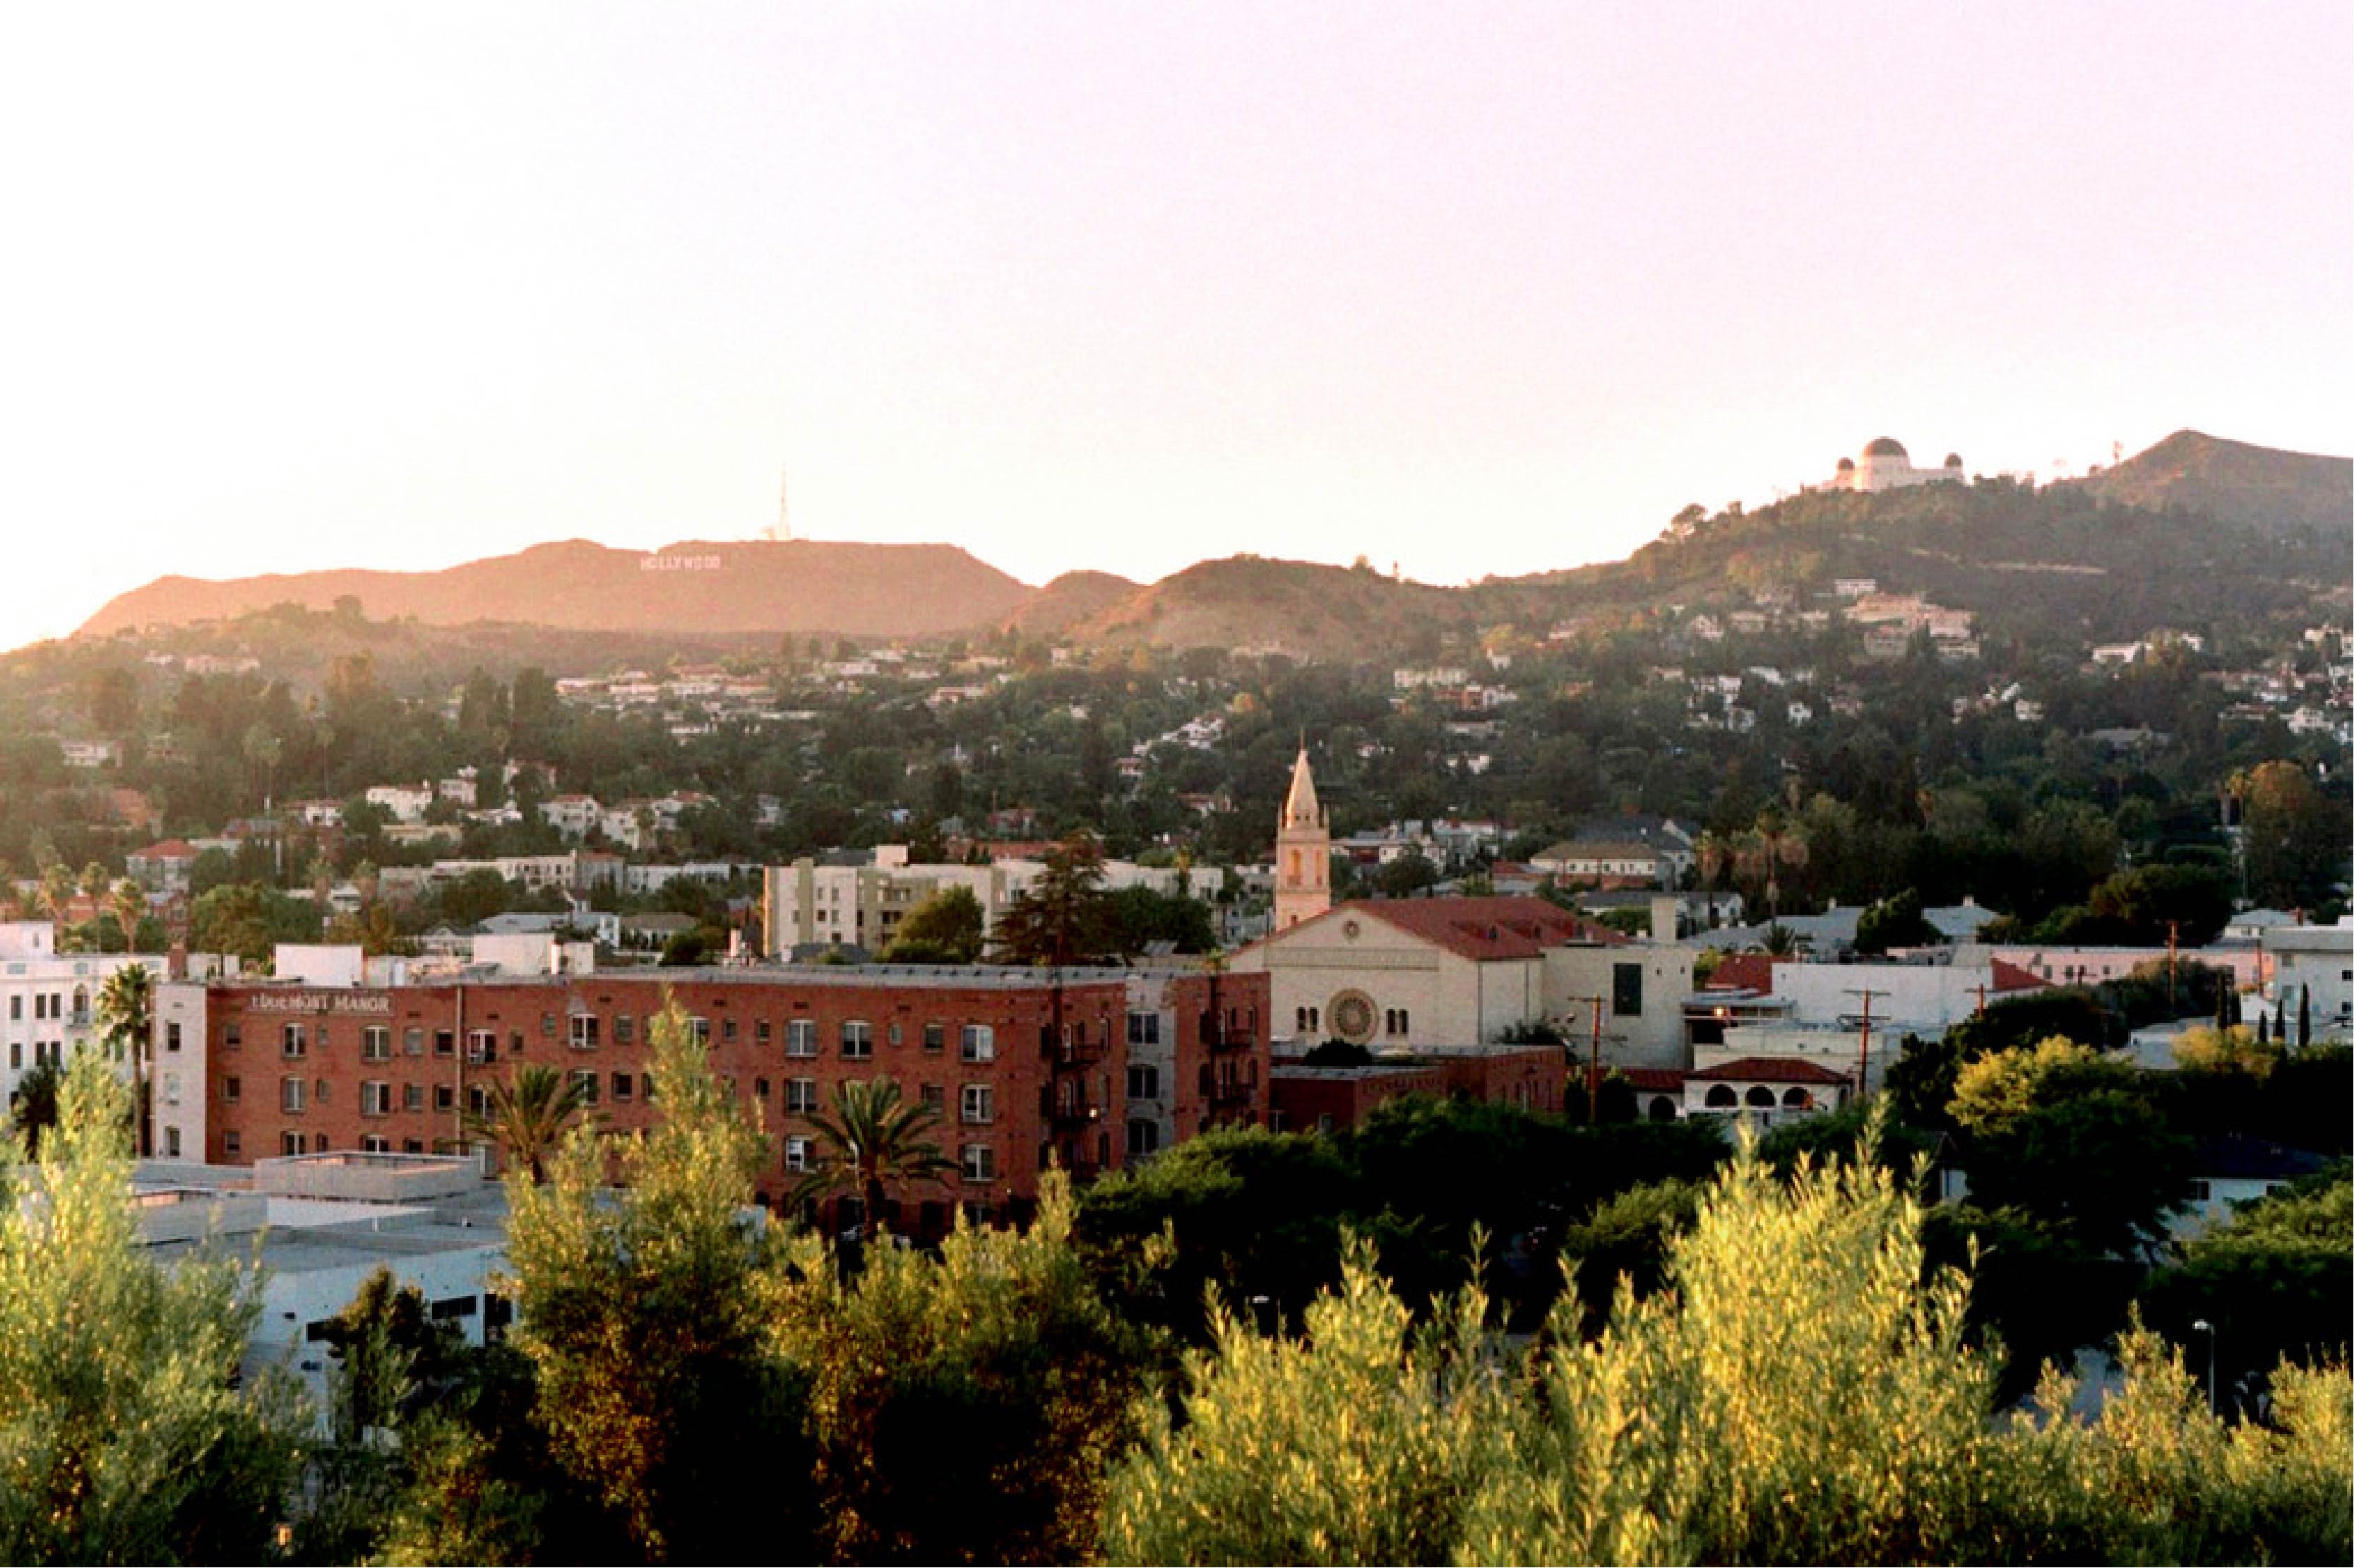 East Hollywood